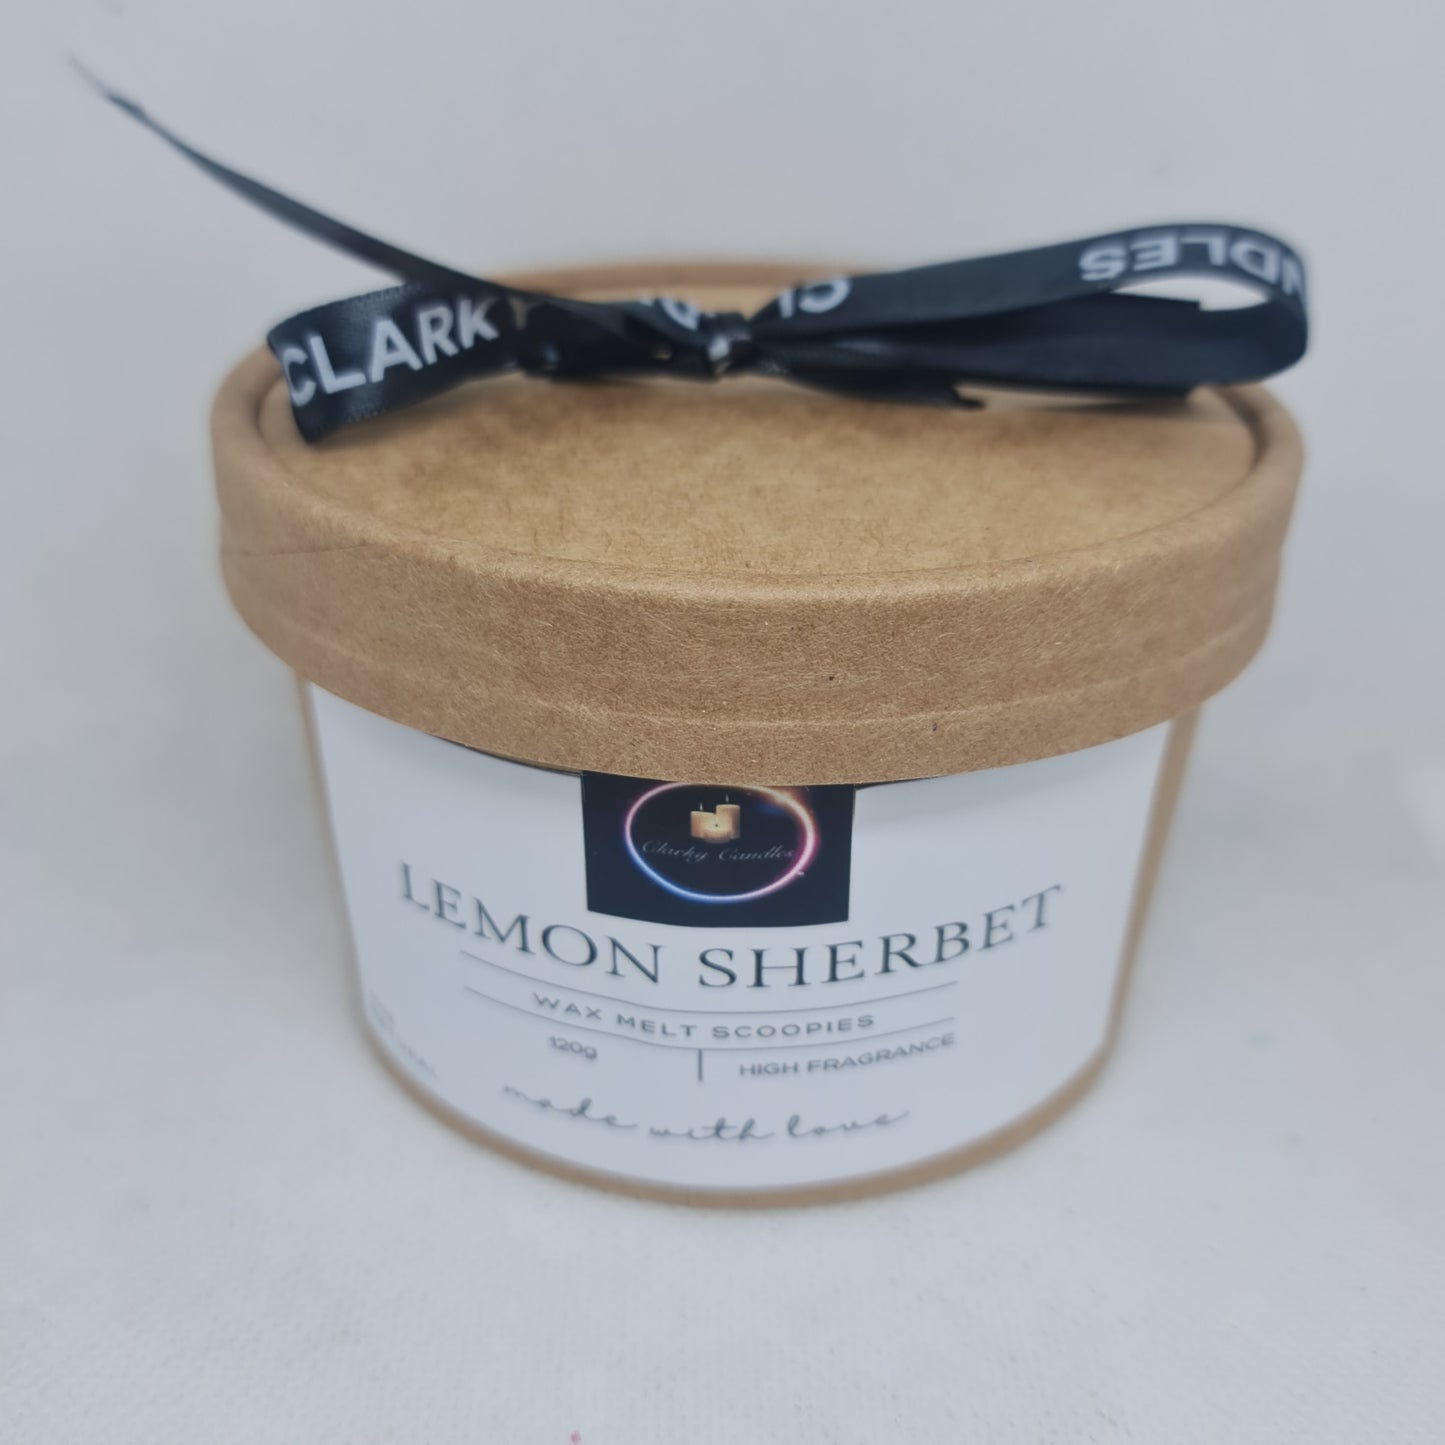 Lemon Sherbet - Wax Melt Scoopies - 120g